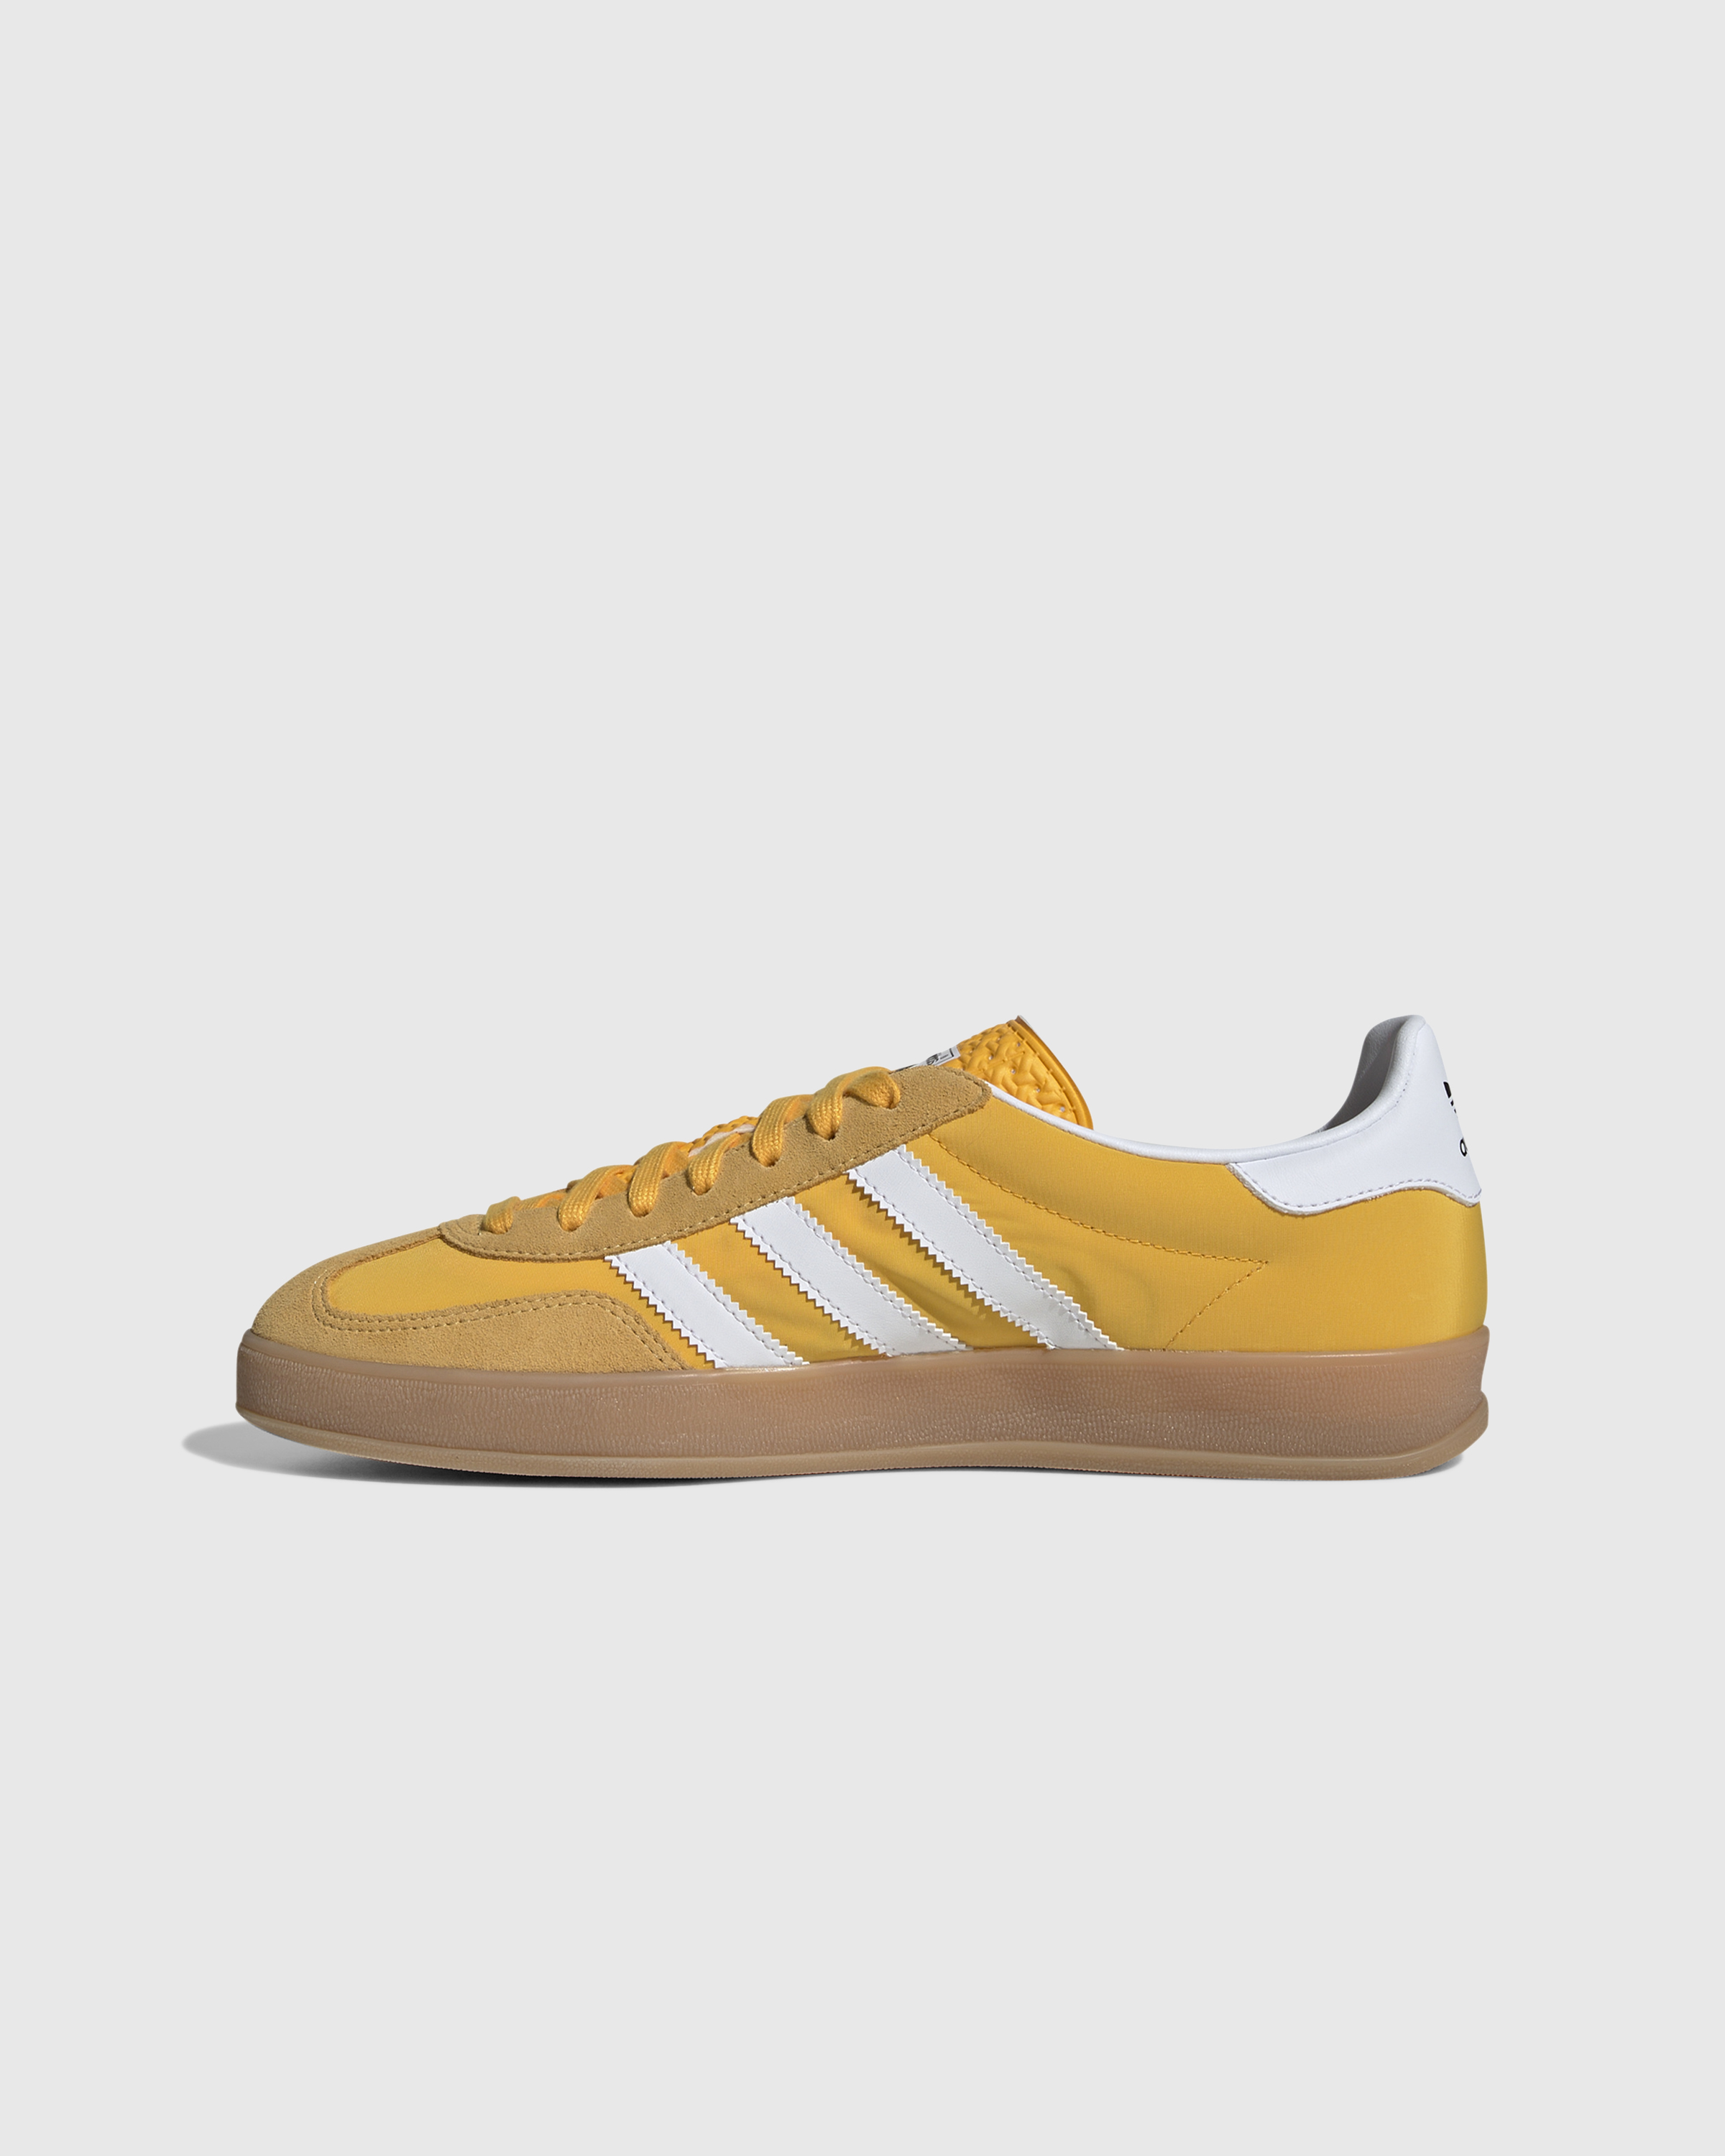 Adidas – Gazelle Indoor Yellow/White - Low Top Sneakers - Yellow - Image 2